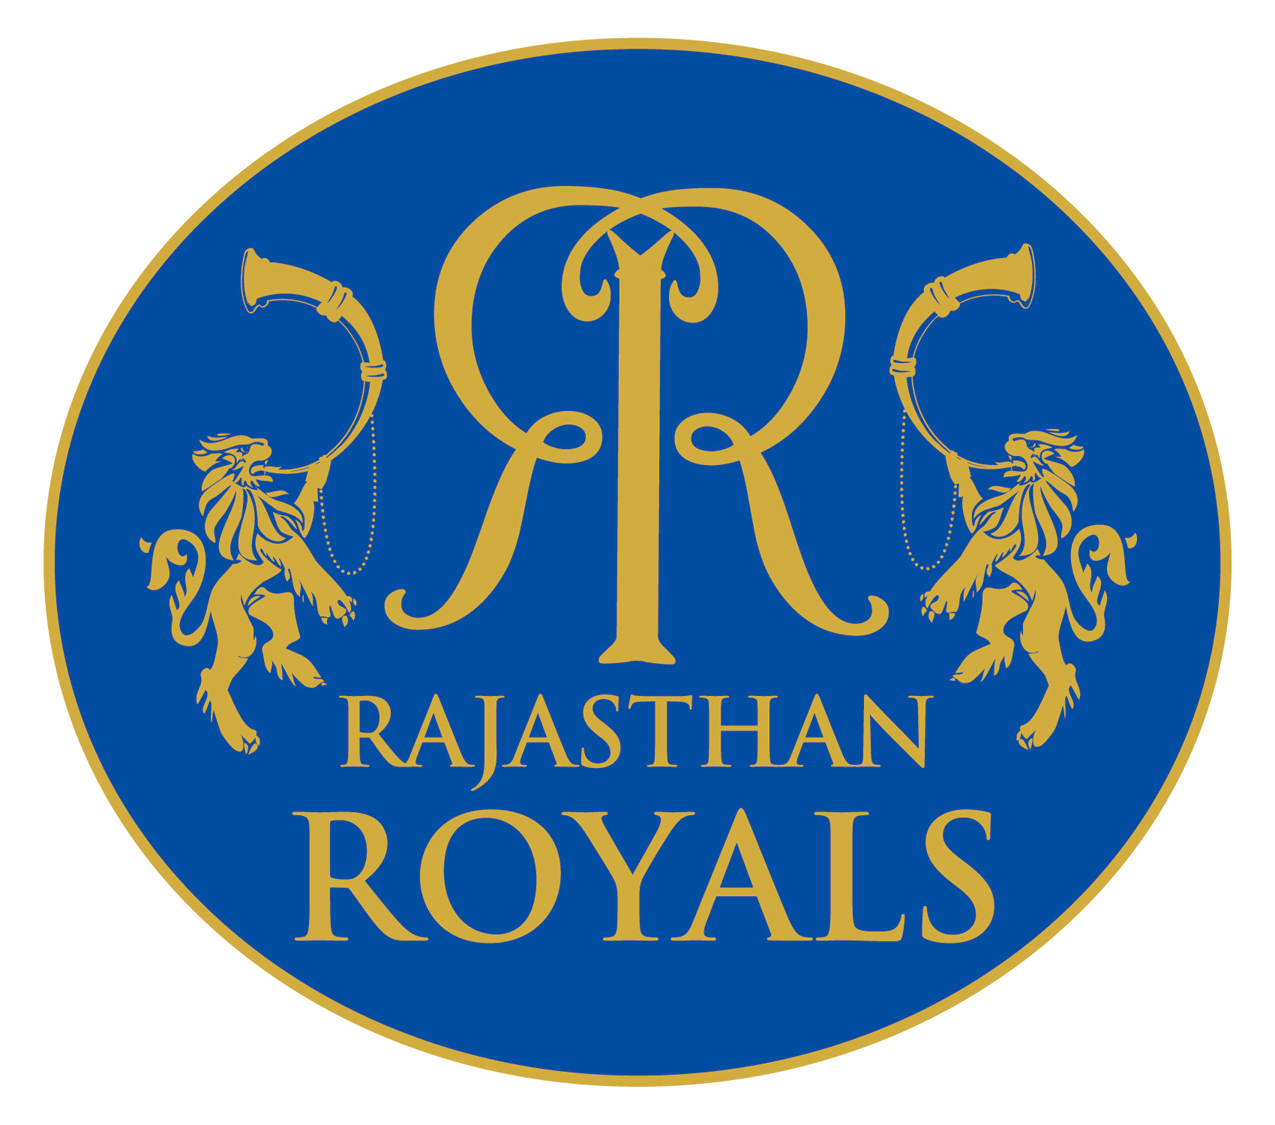 IPL Cricket Live Online: IPL Rajasthan Royals Logo, IPL Rajasthan